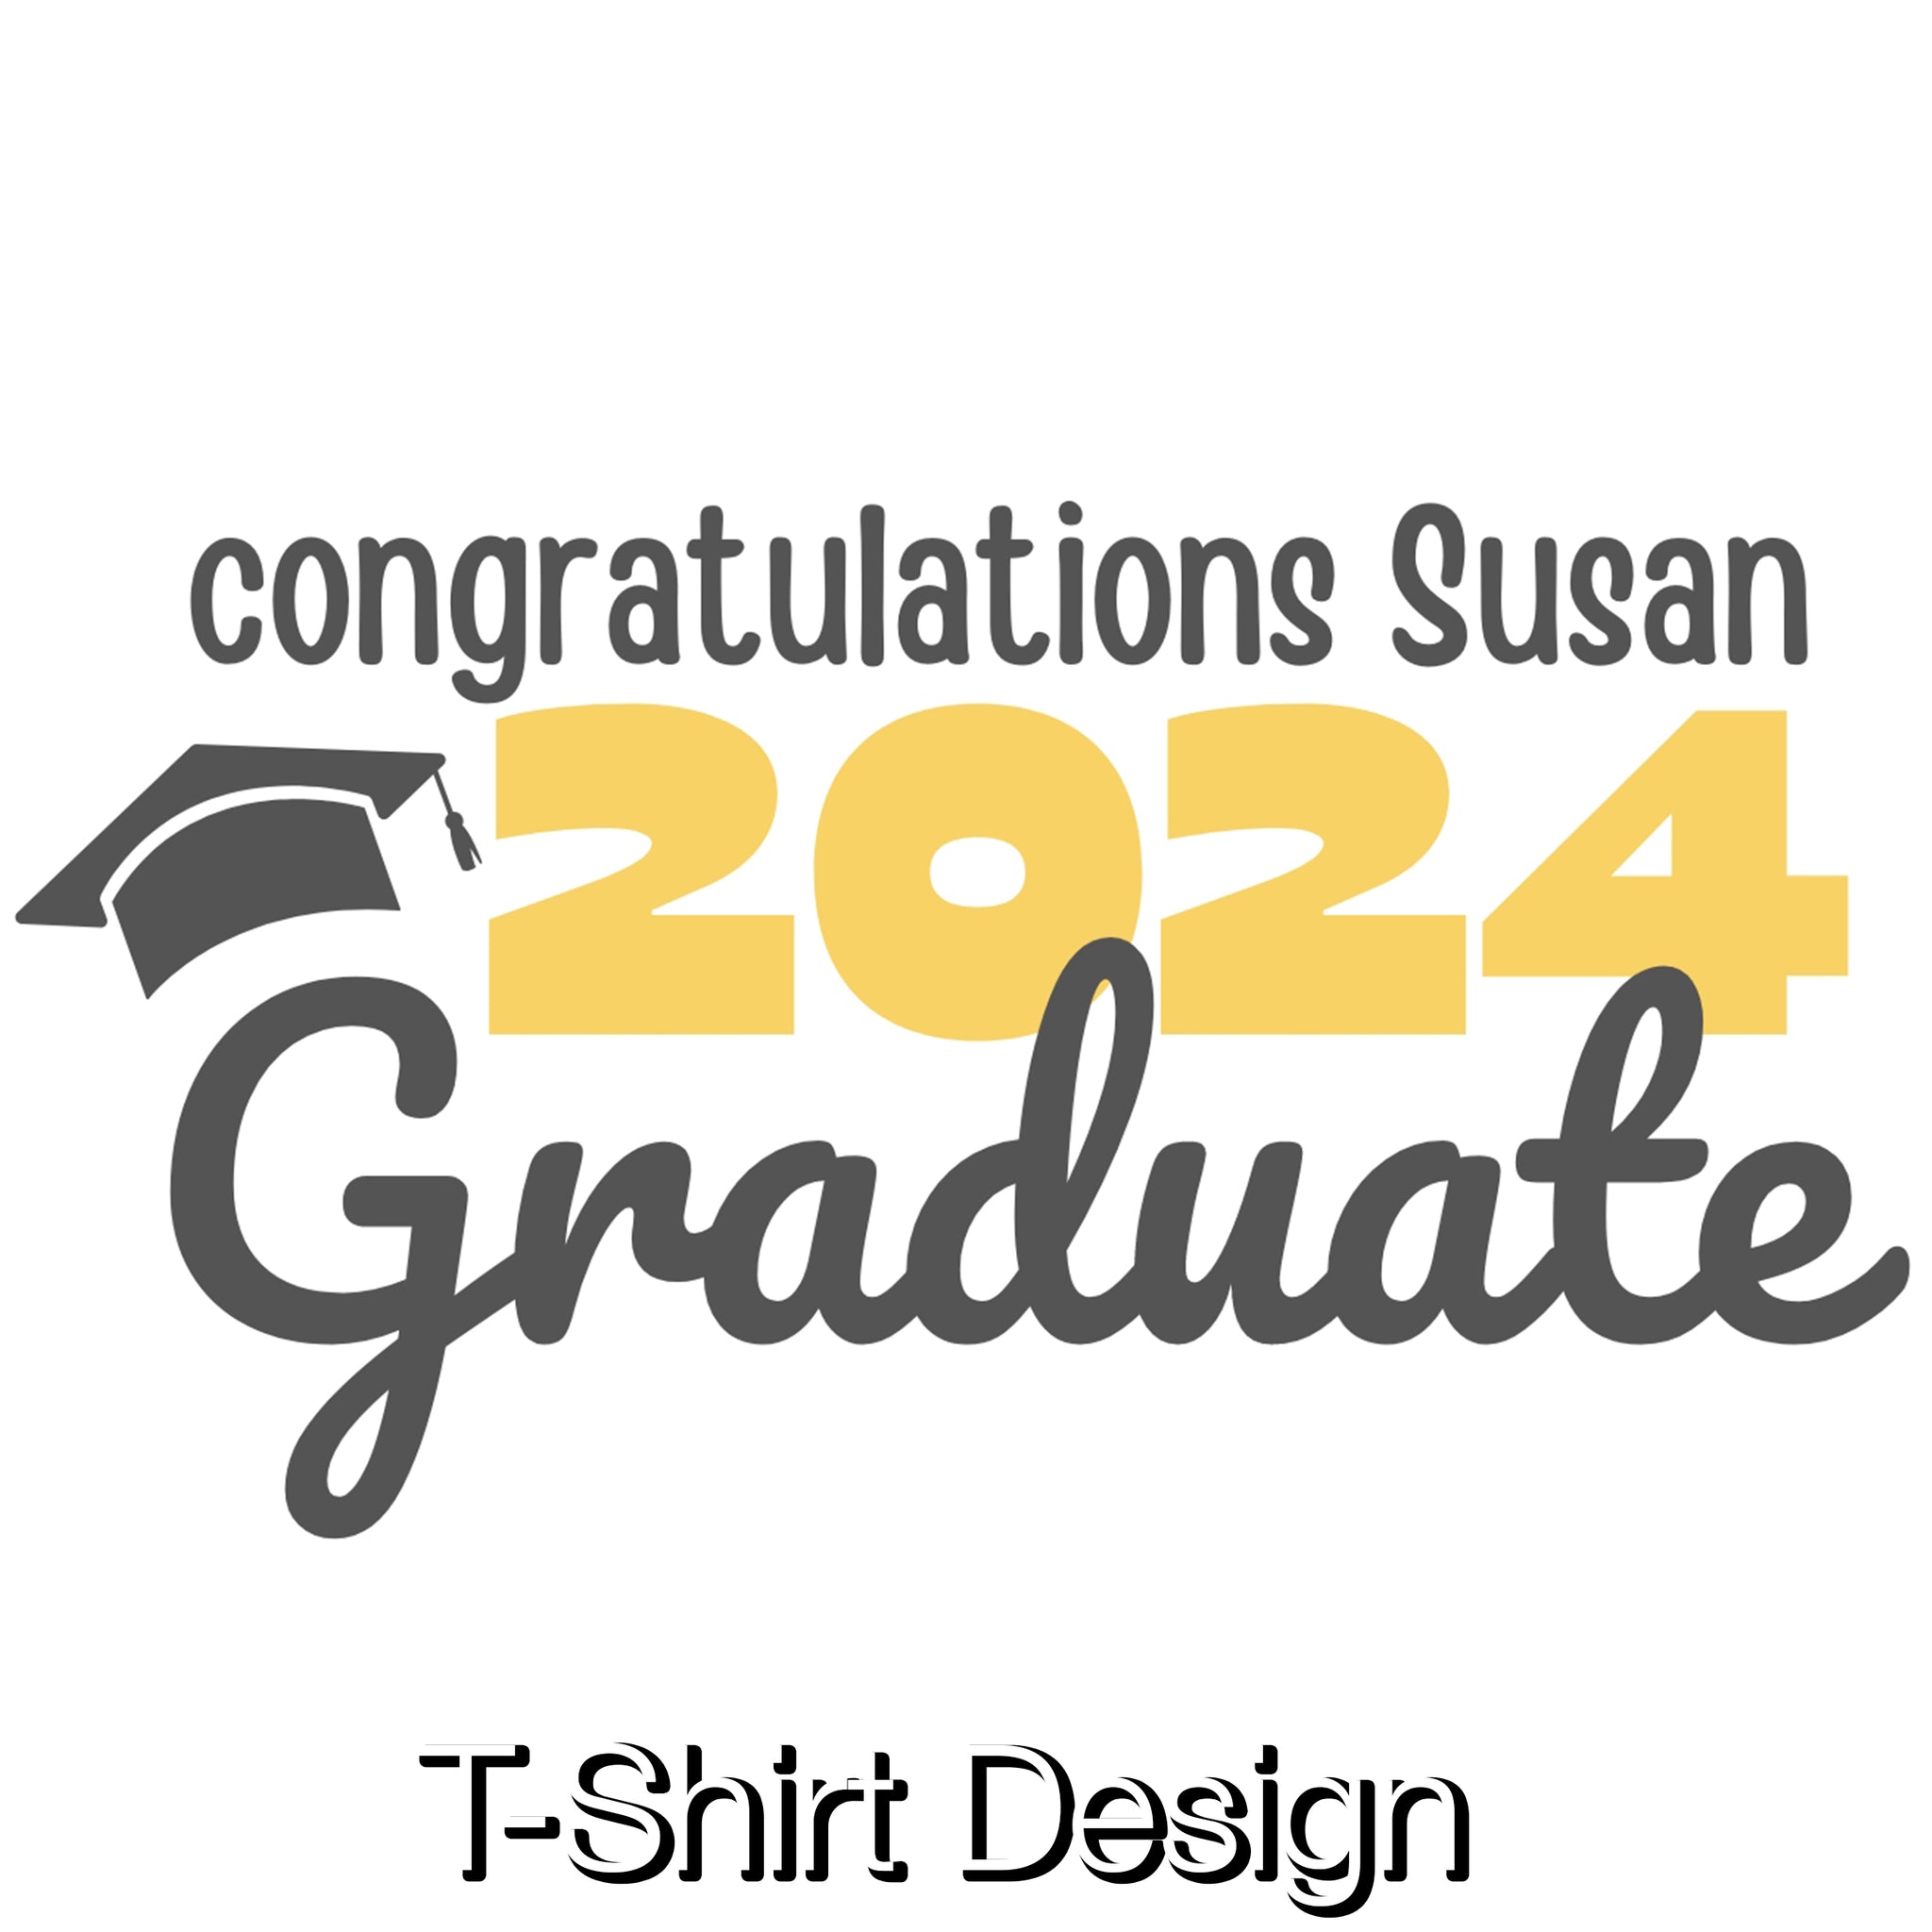 'Graduation' Design